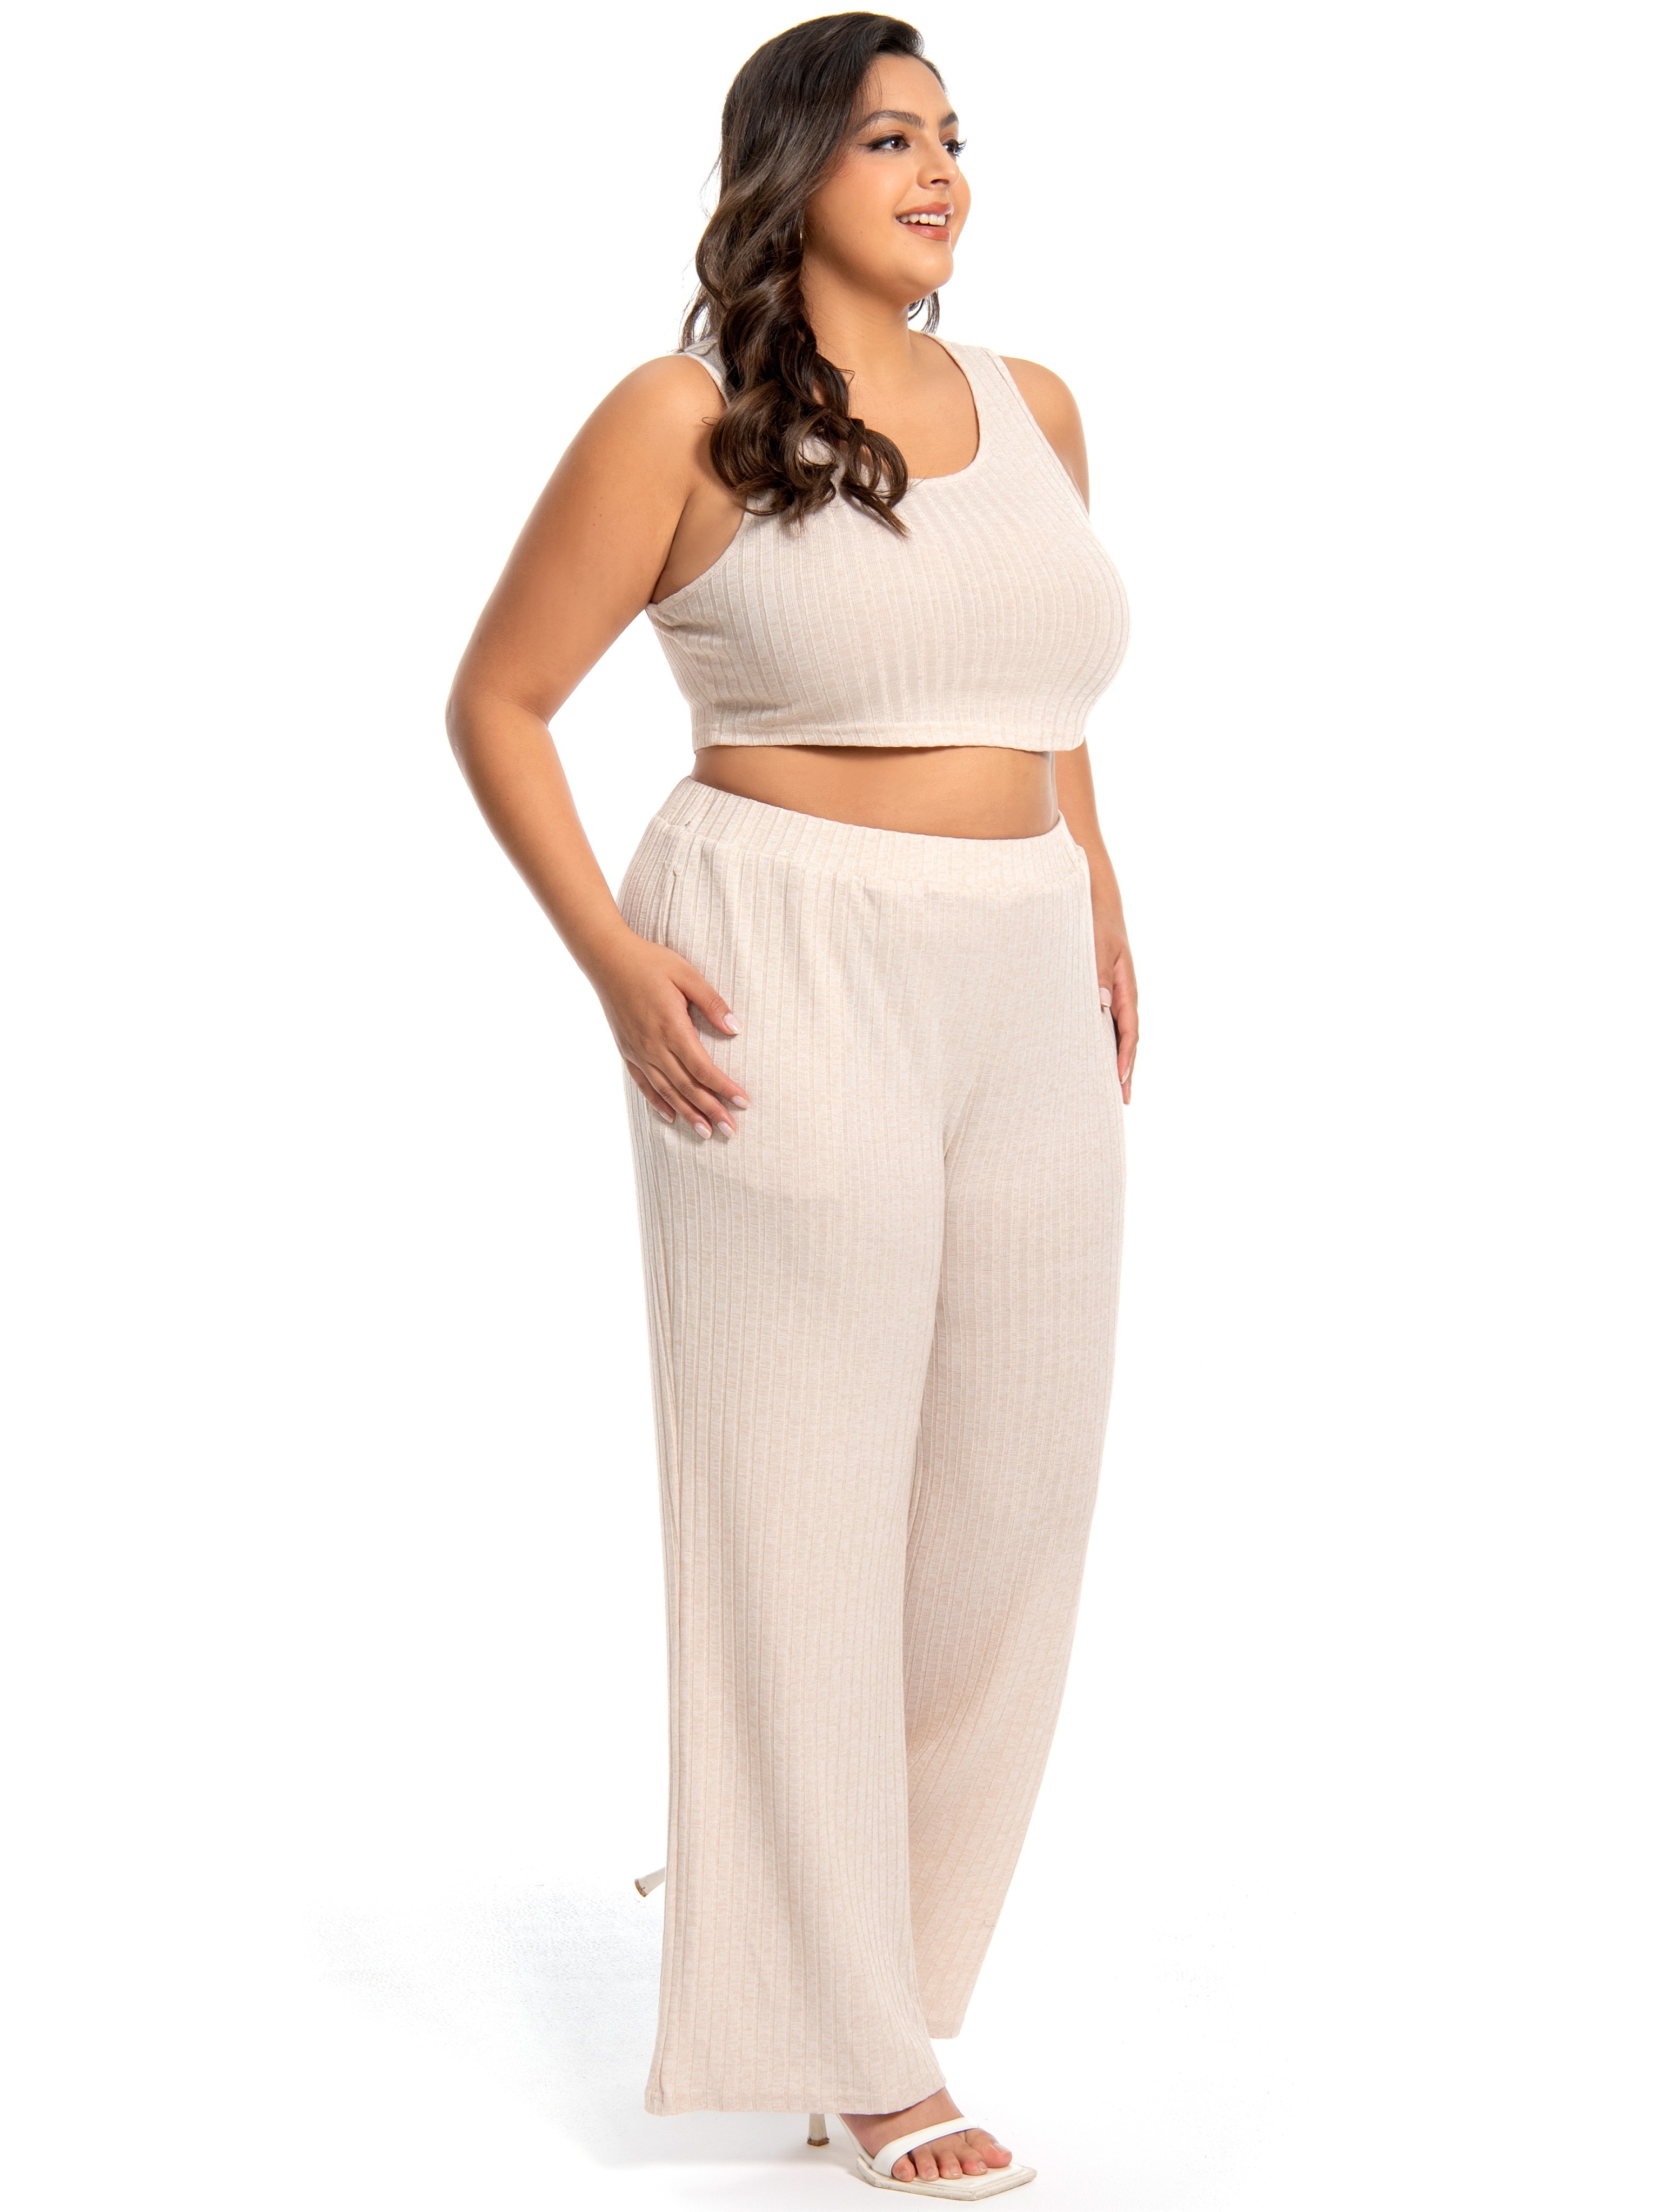 2-Piece Pant Set  Plus size white outfit, Plus size women, Ladies